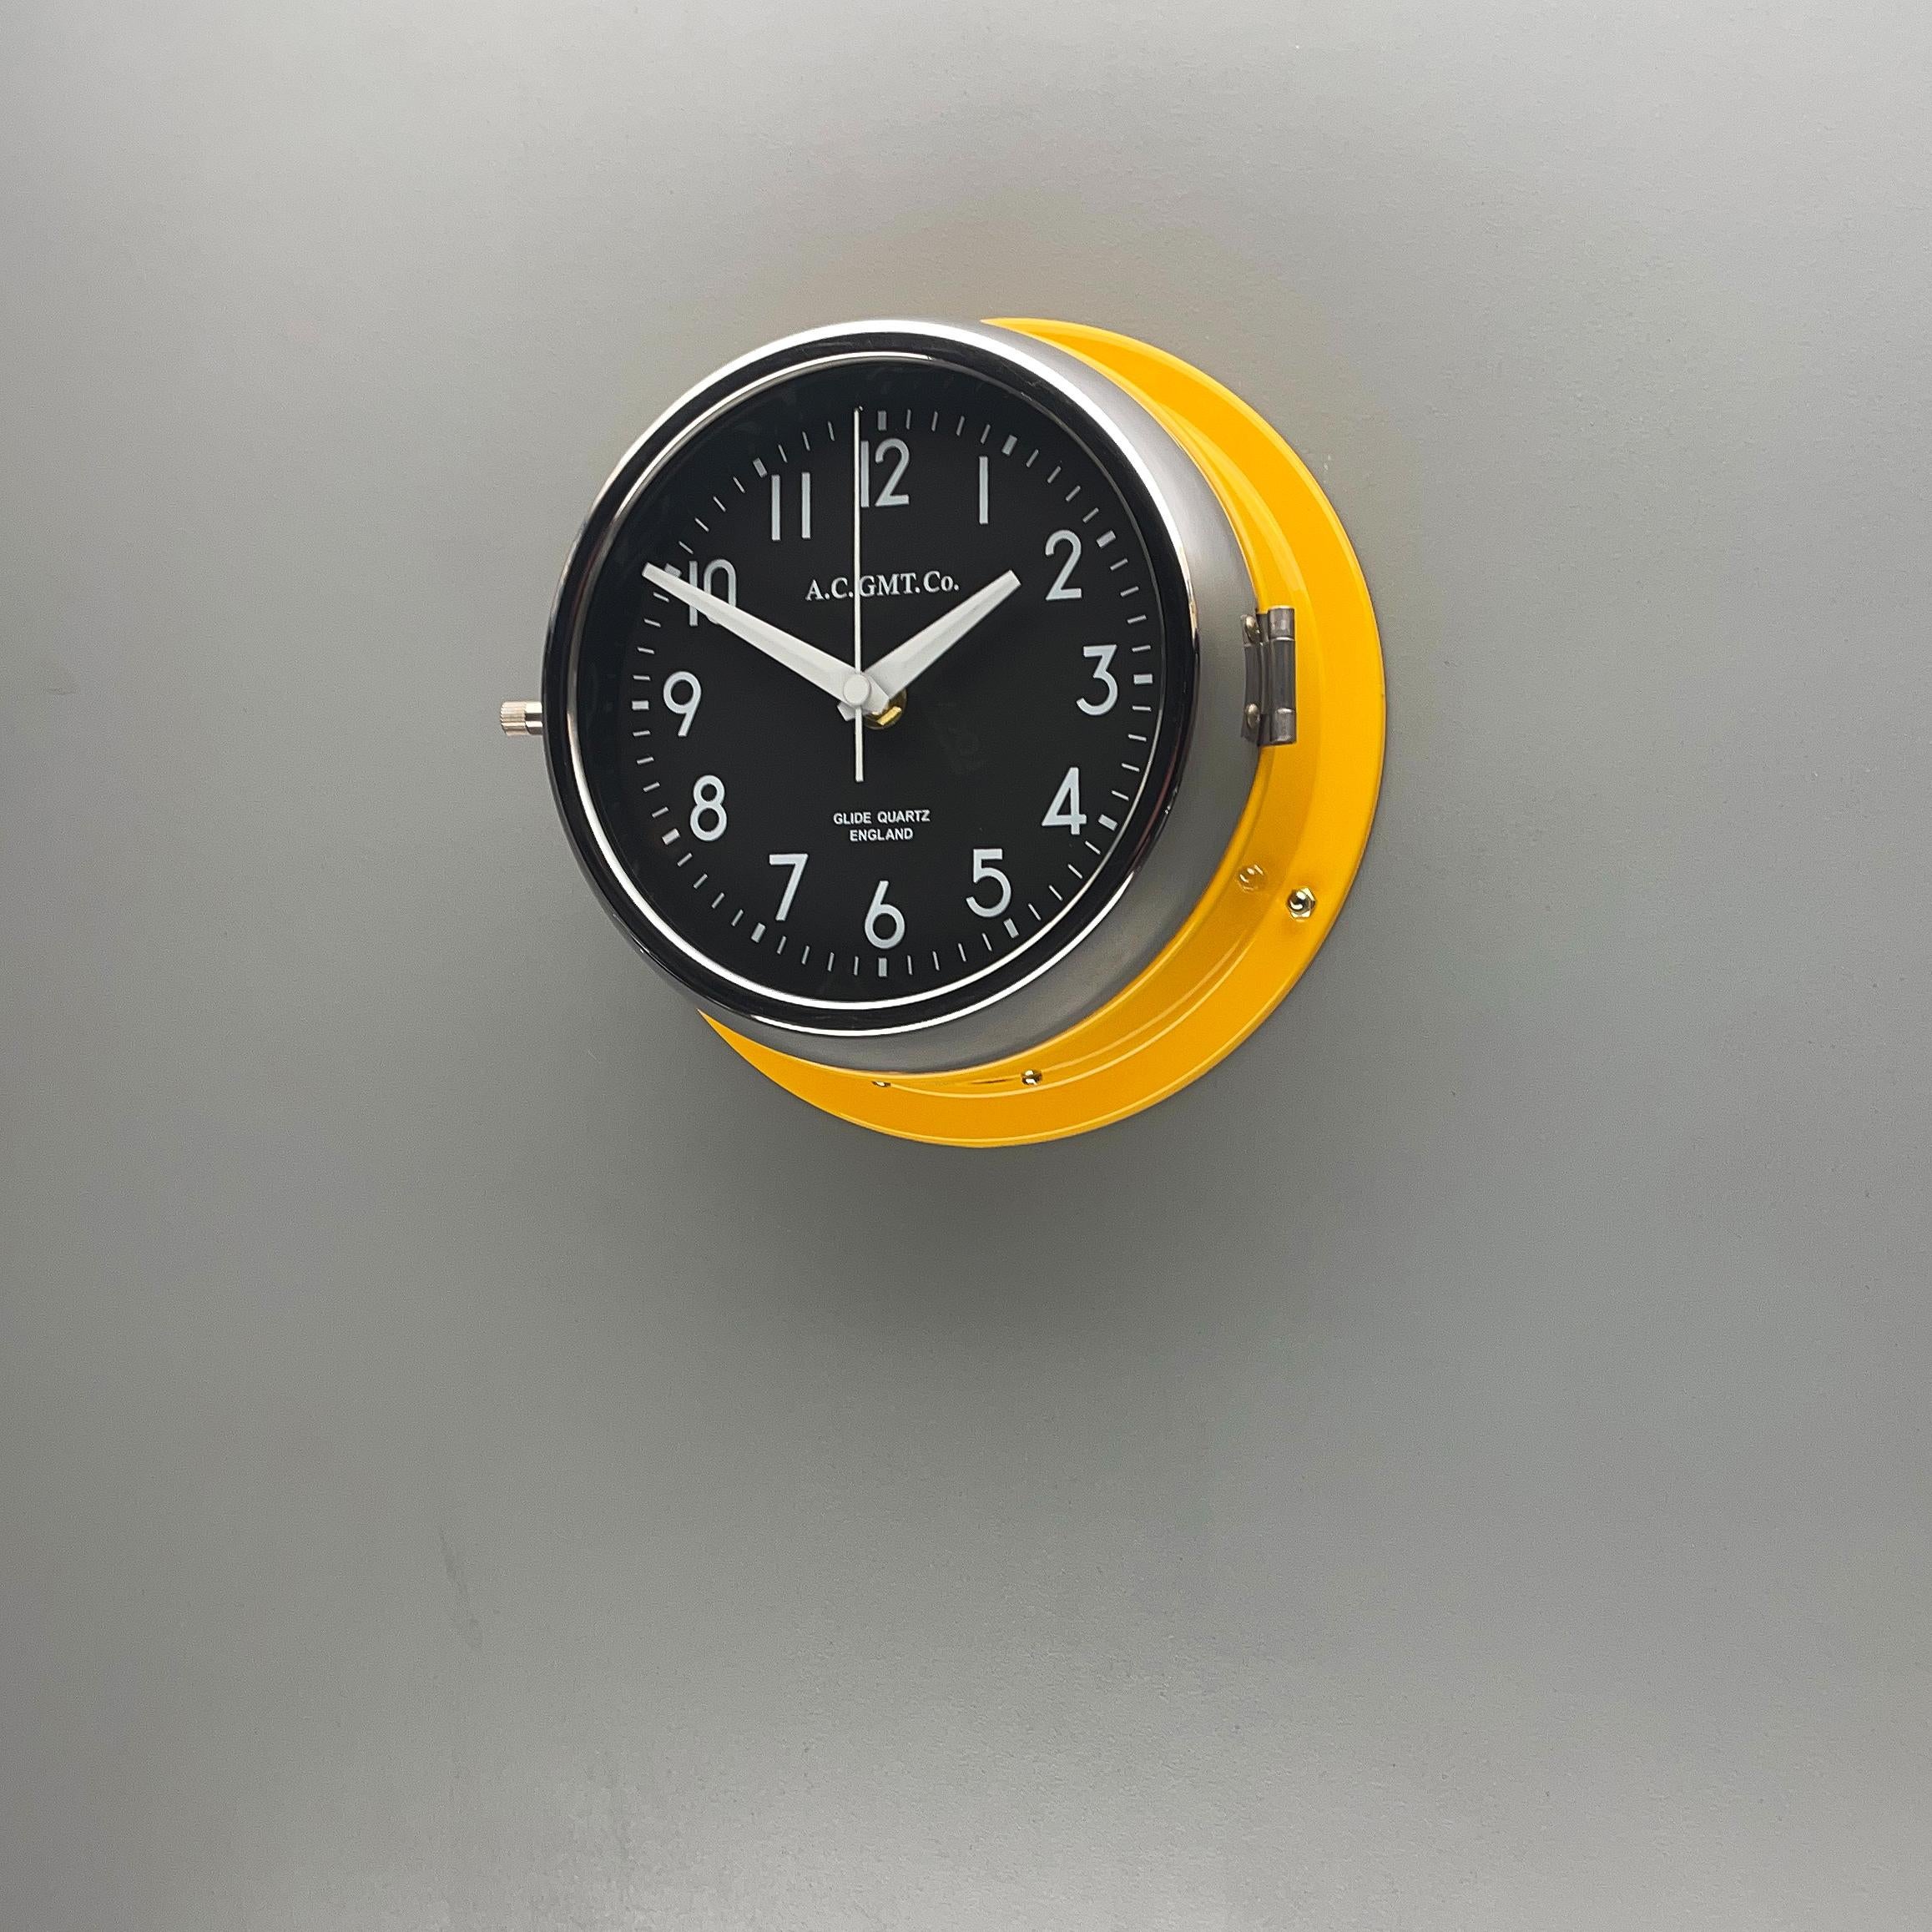 Steel 1970s British Yellow Illumination AC GMT Co. Classic Quartz Wall Clock For Sale